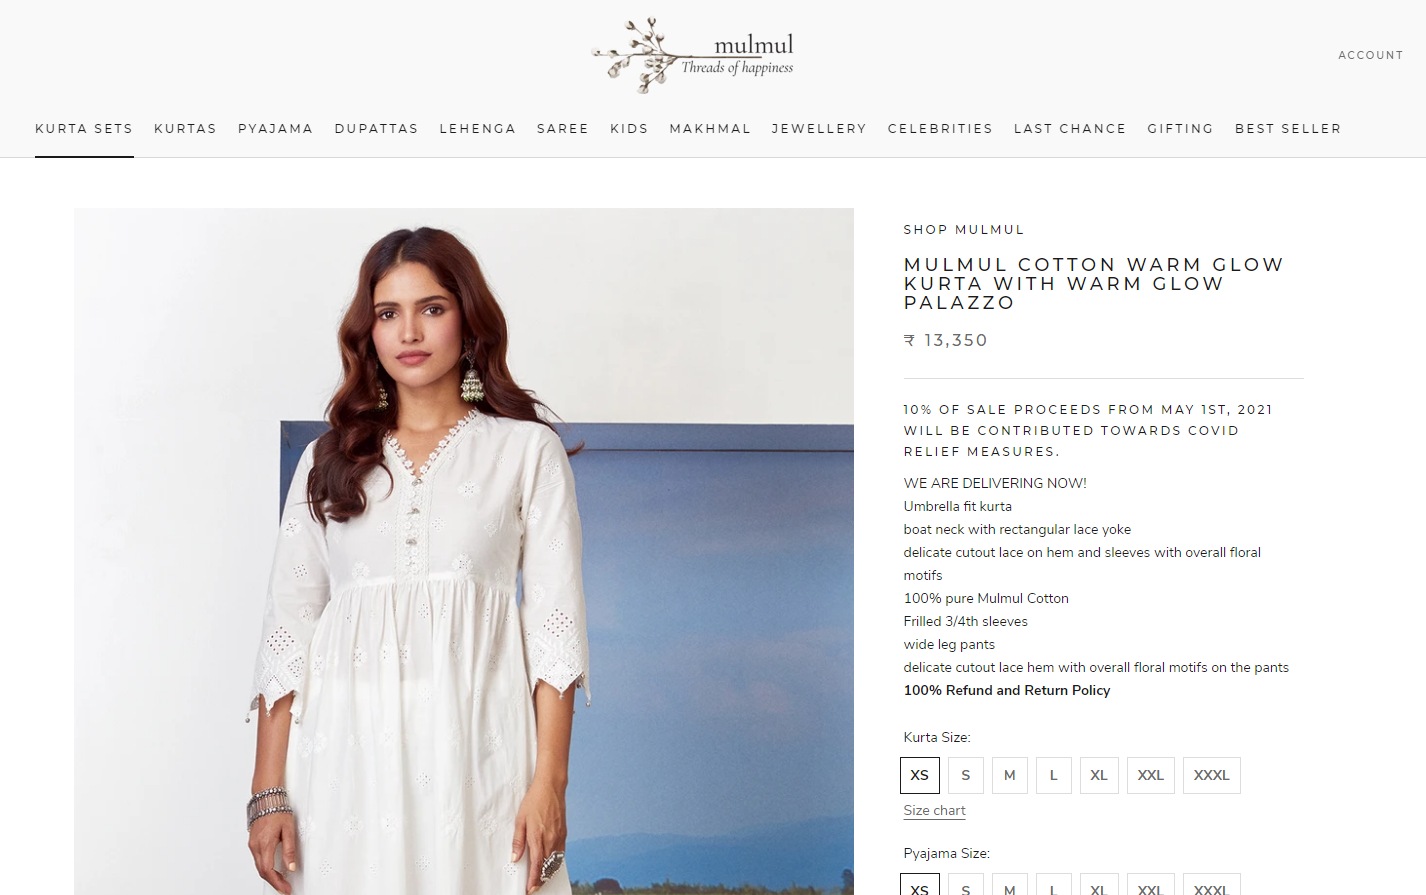 Gauahar Khan's outfit is worth ₹13,350.(shopmulmul.com)